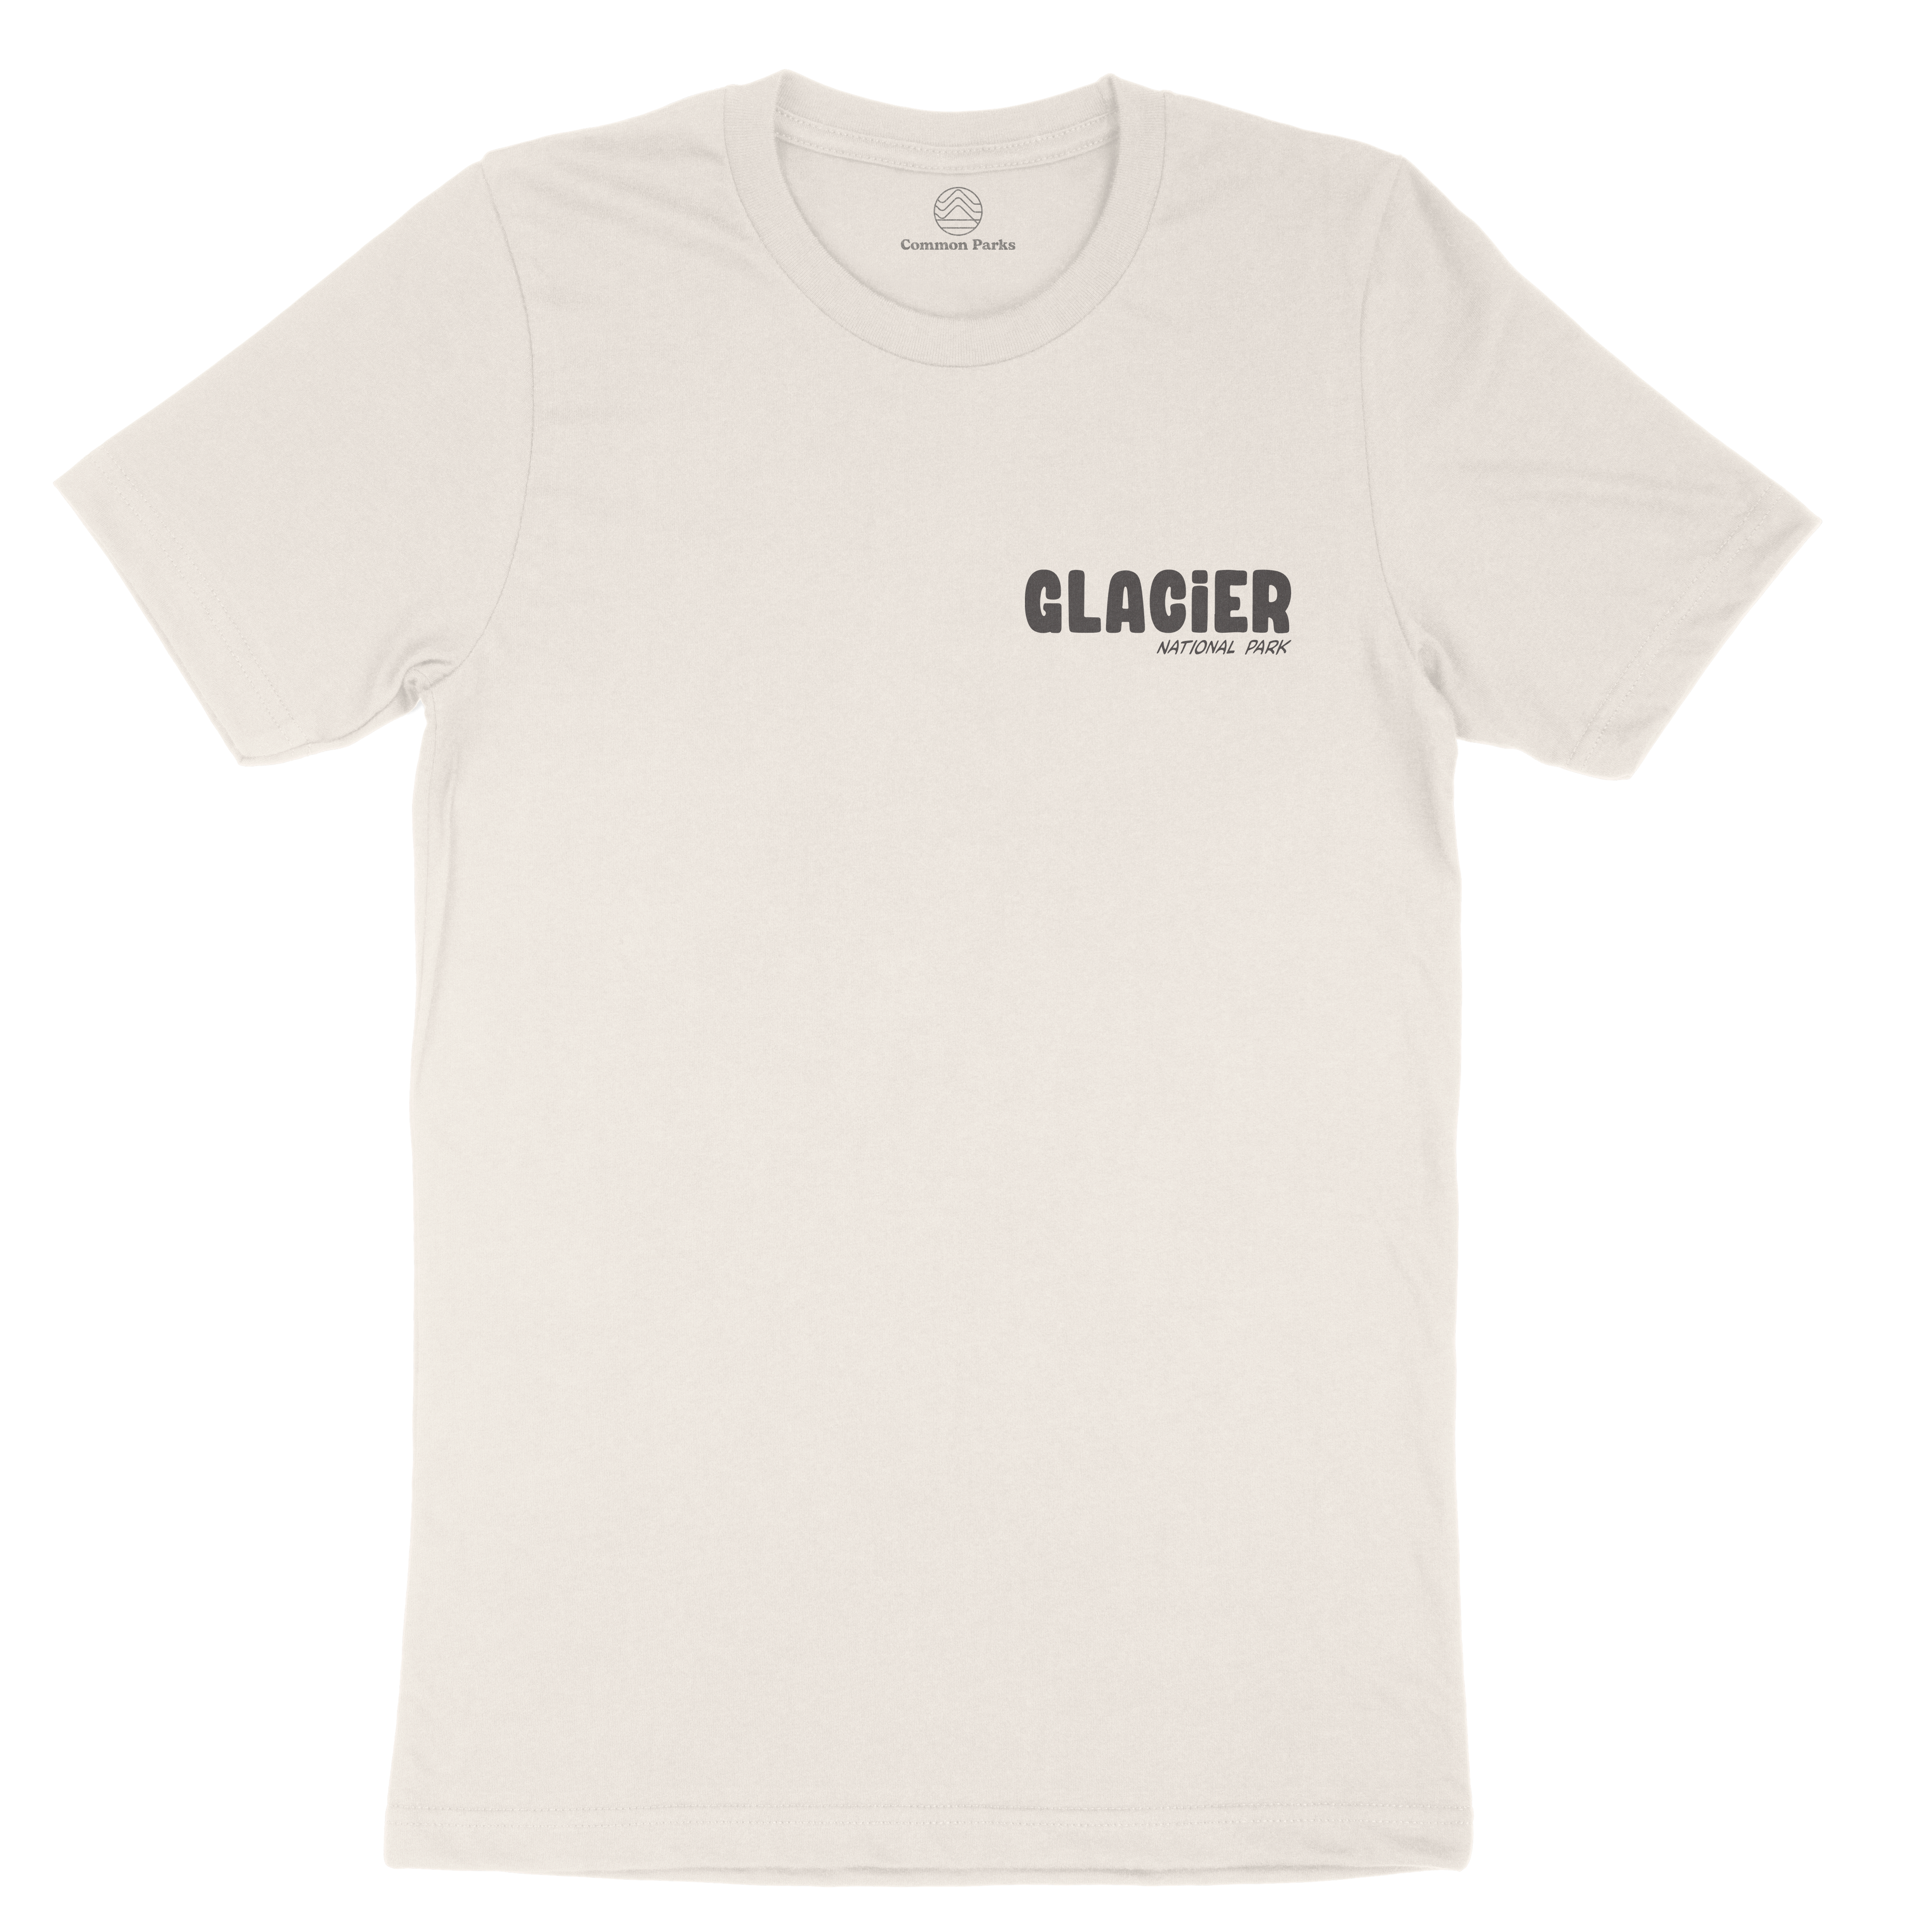 Parks Project Glacier's Greatest Hits T-Shirt - Men's - Clothing